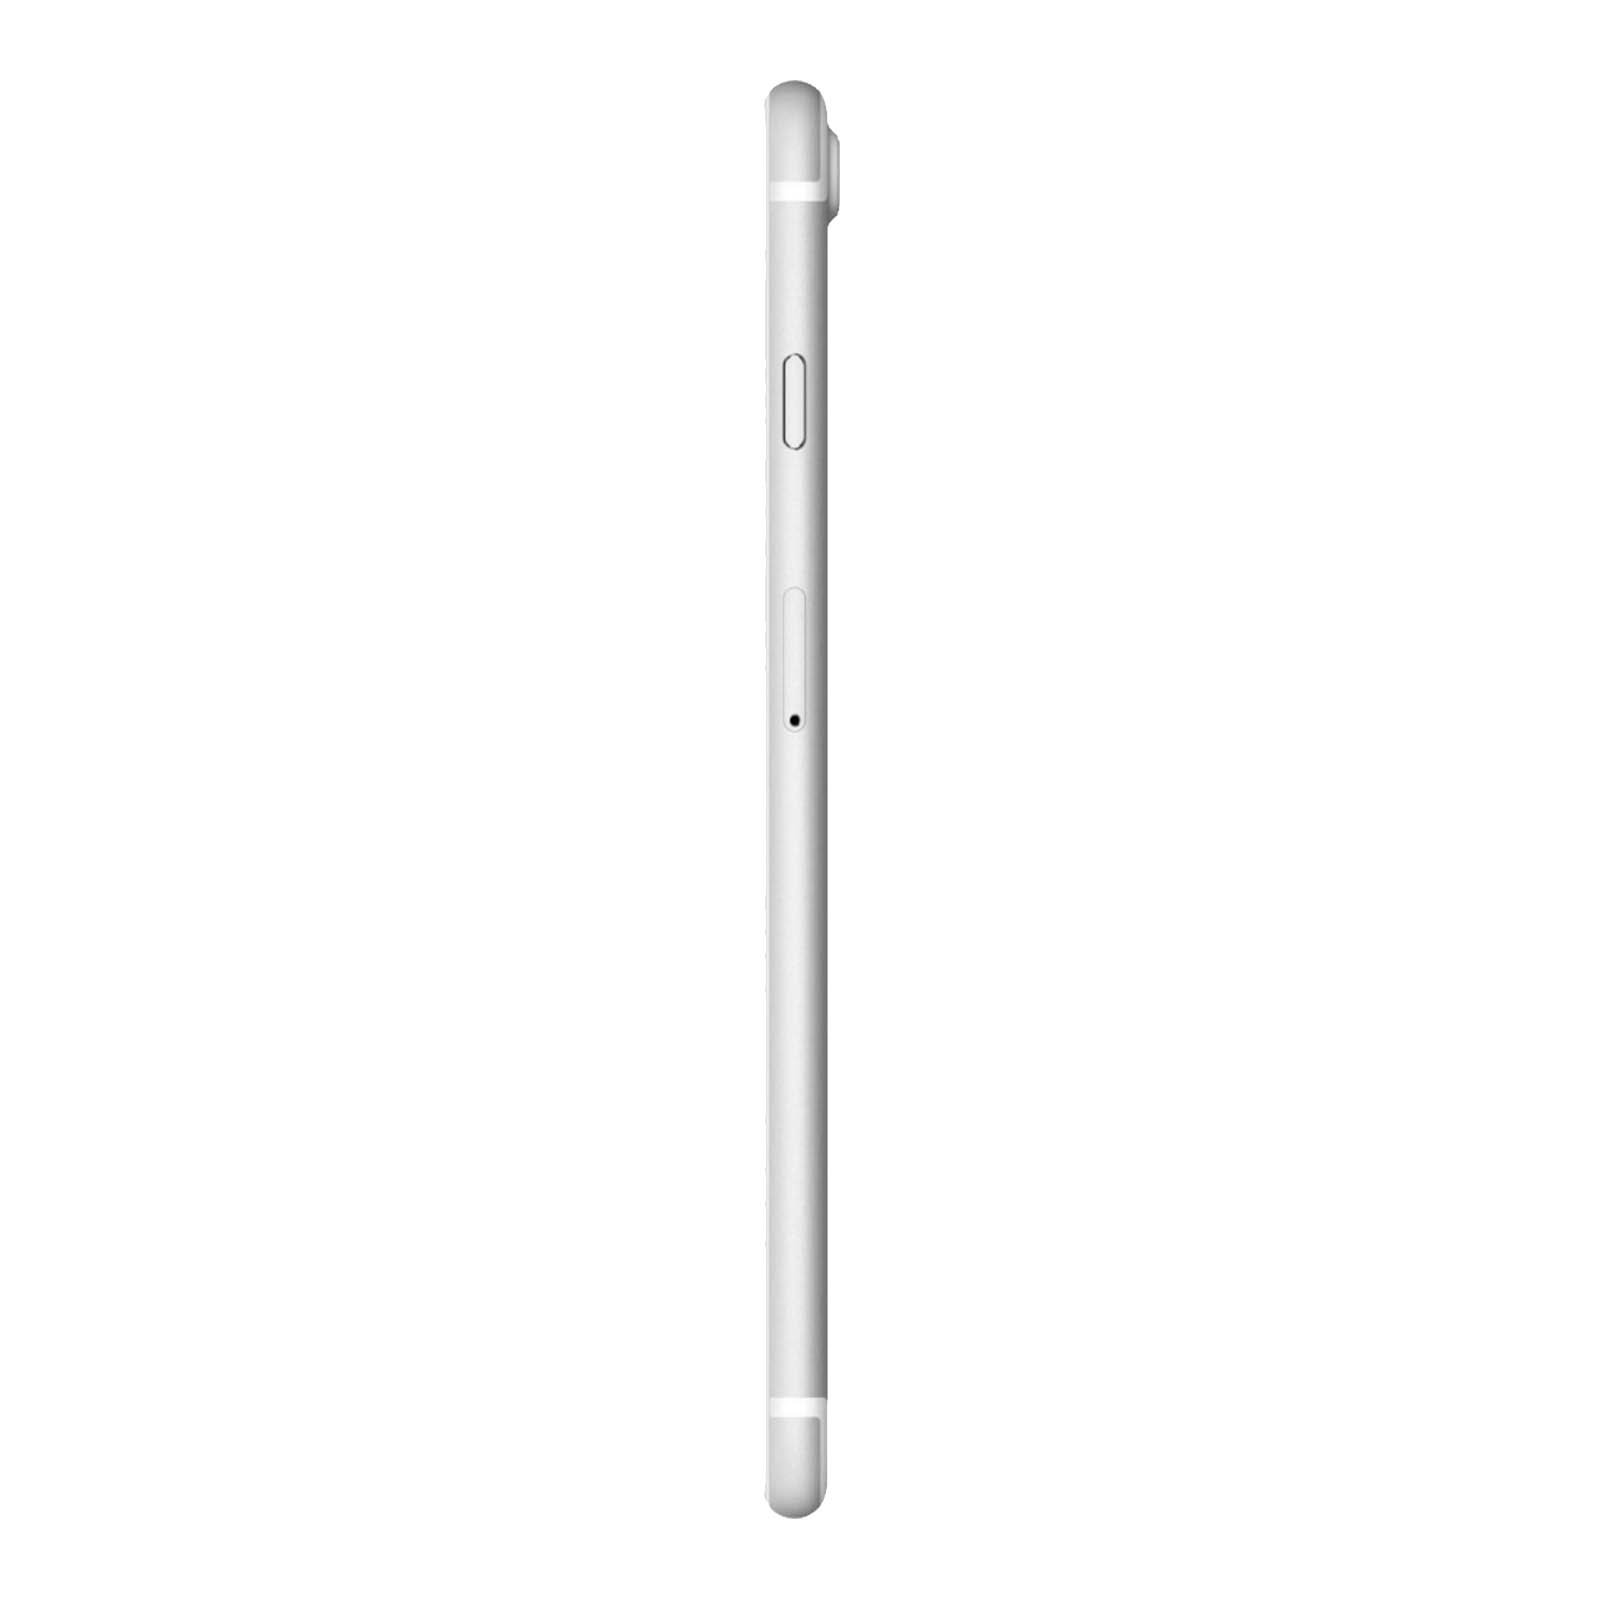 Apple iPhone 7 Plus 128GB Silver Good - Unlocked